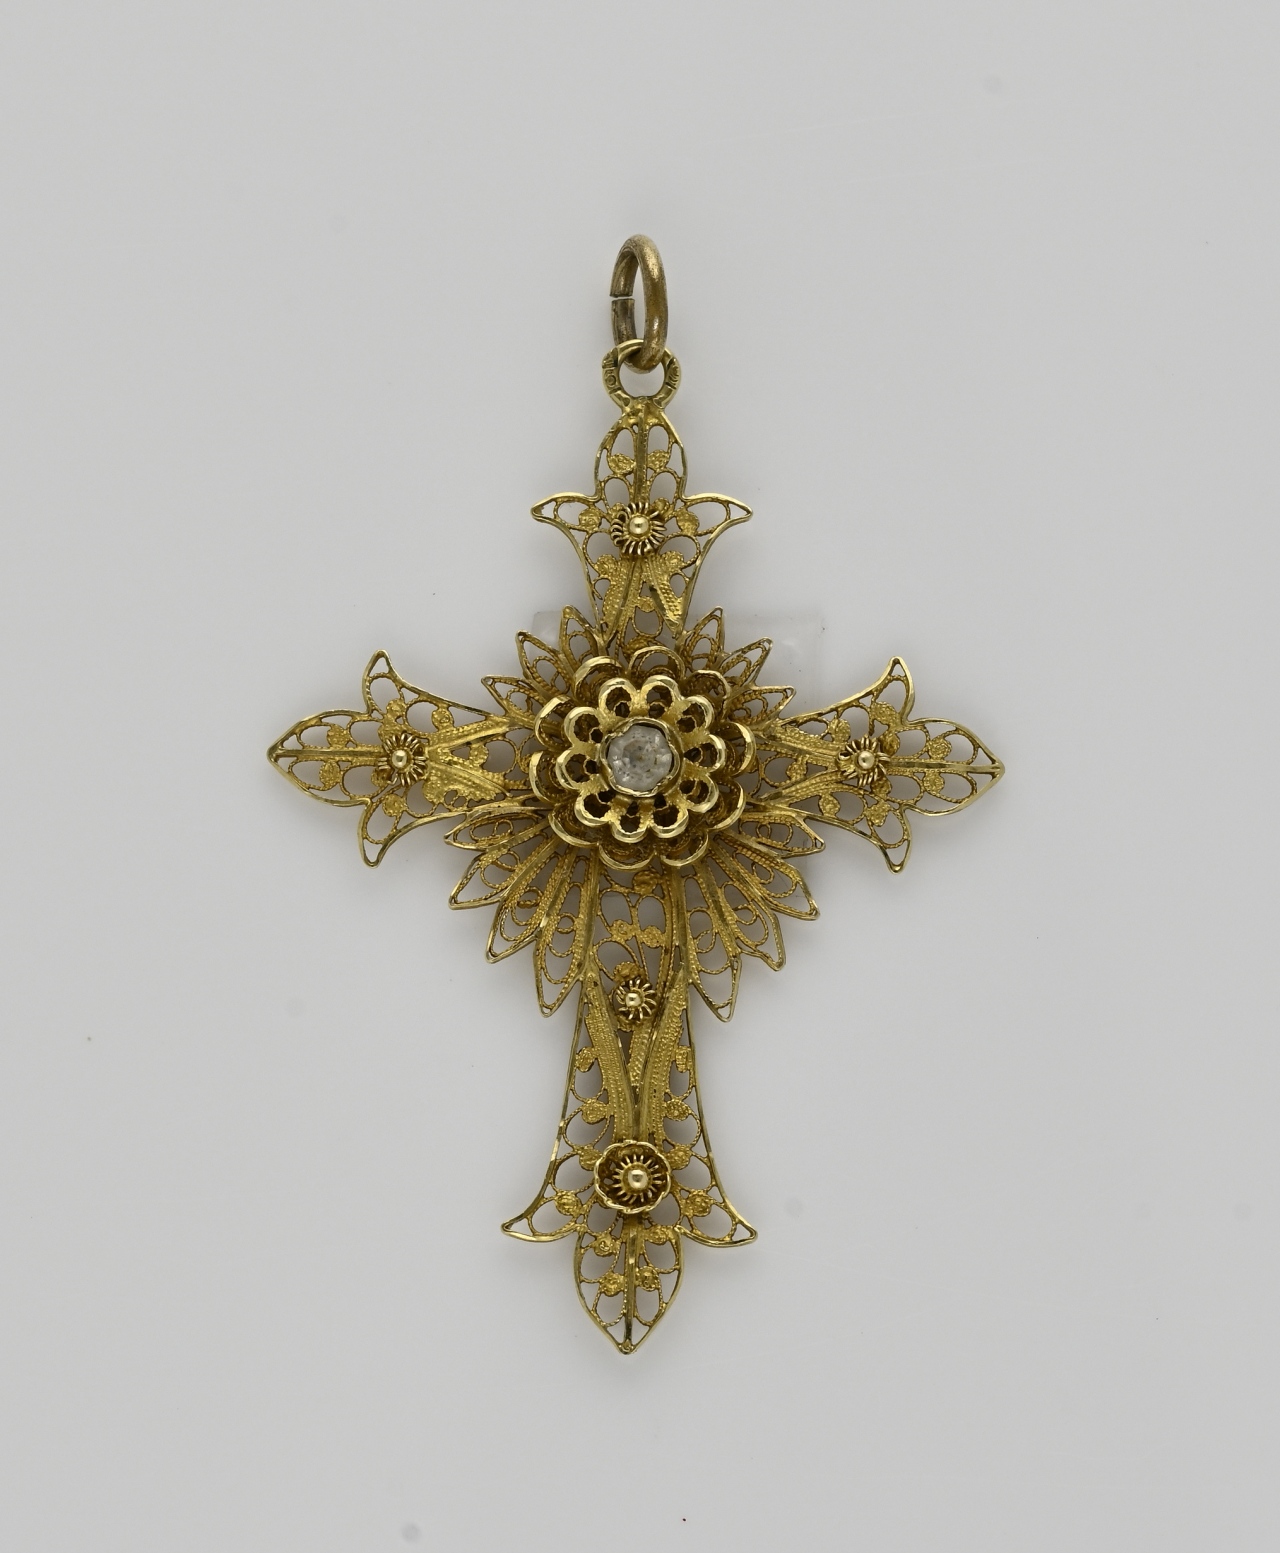 Golden cross with filigree